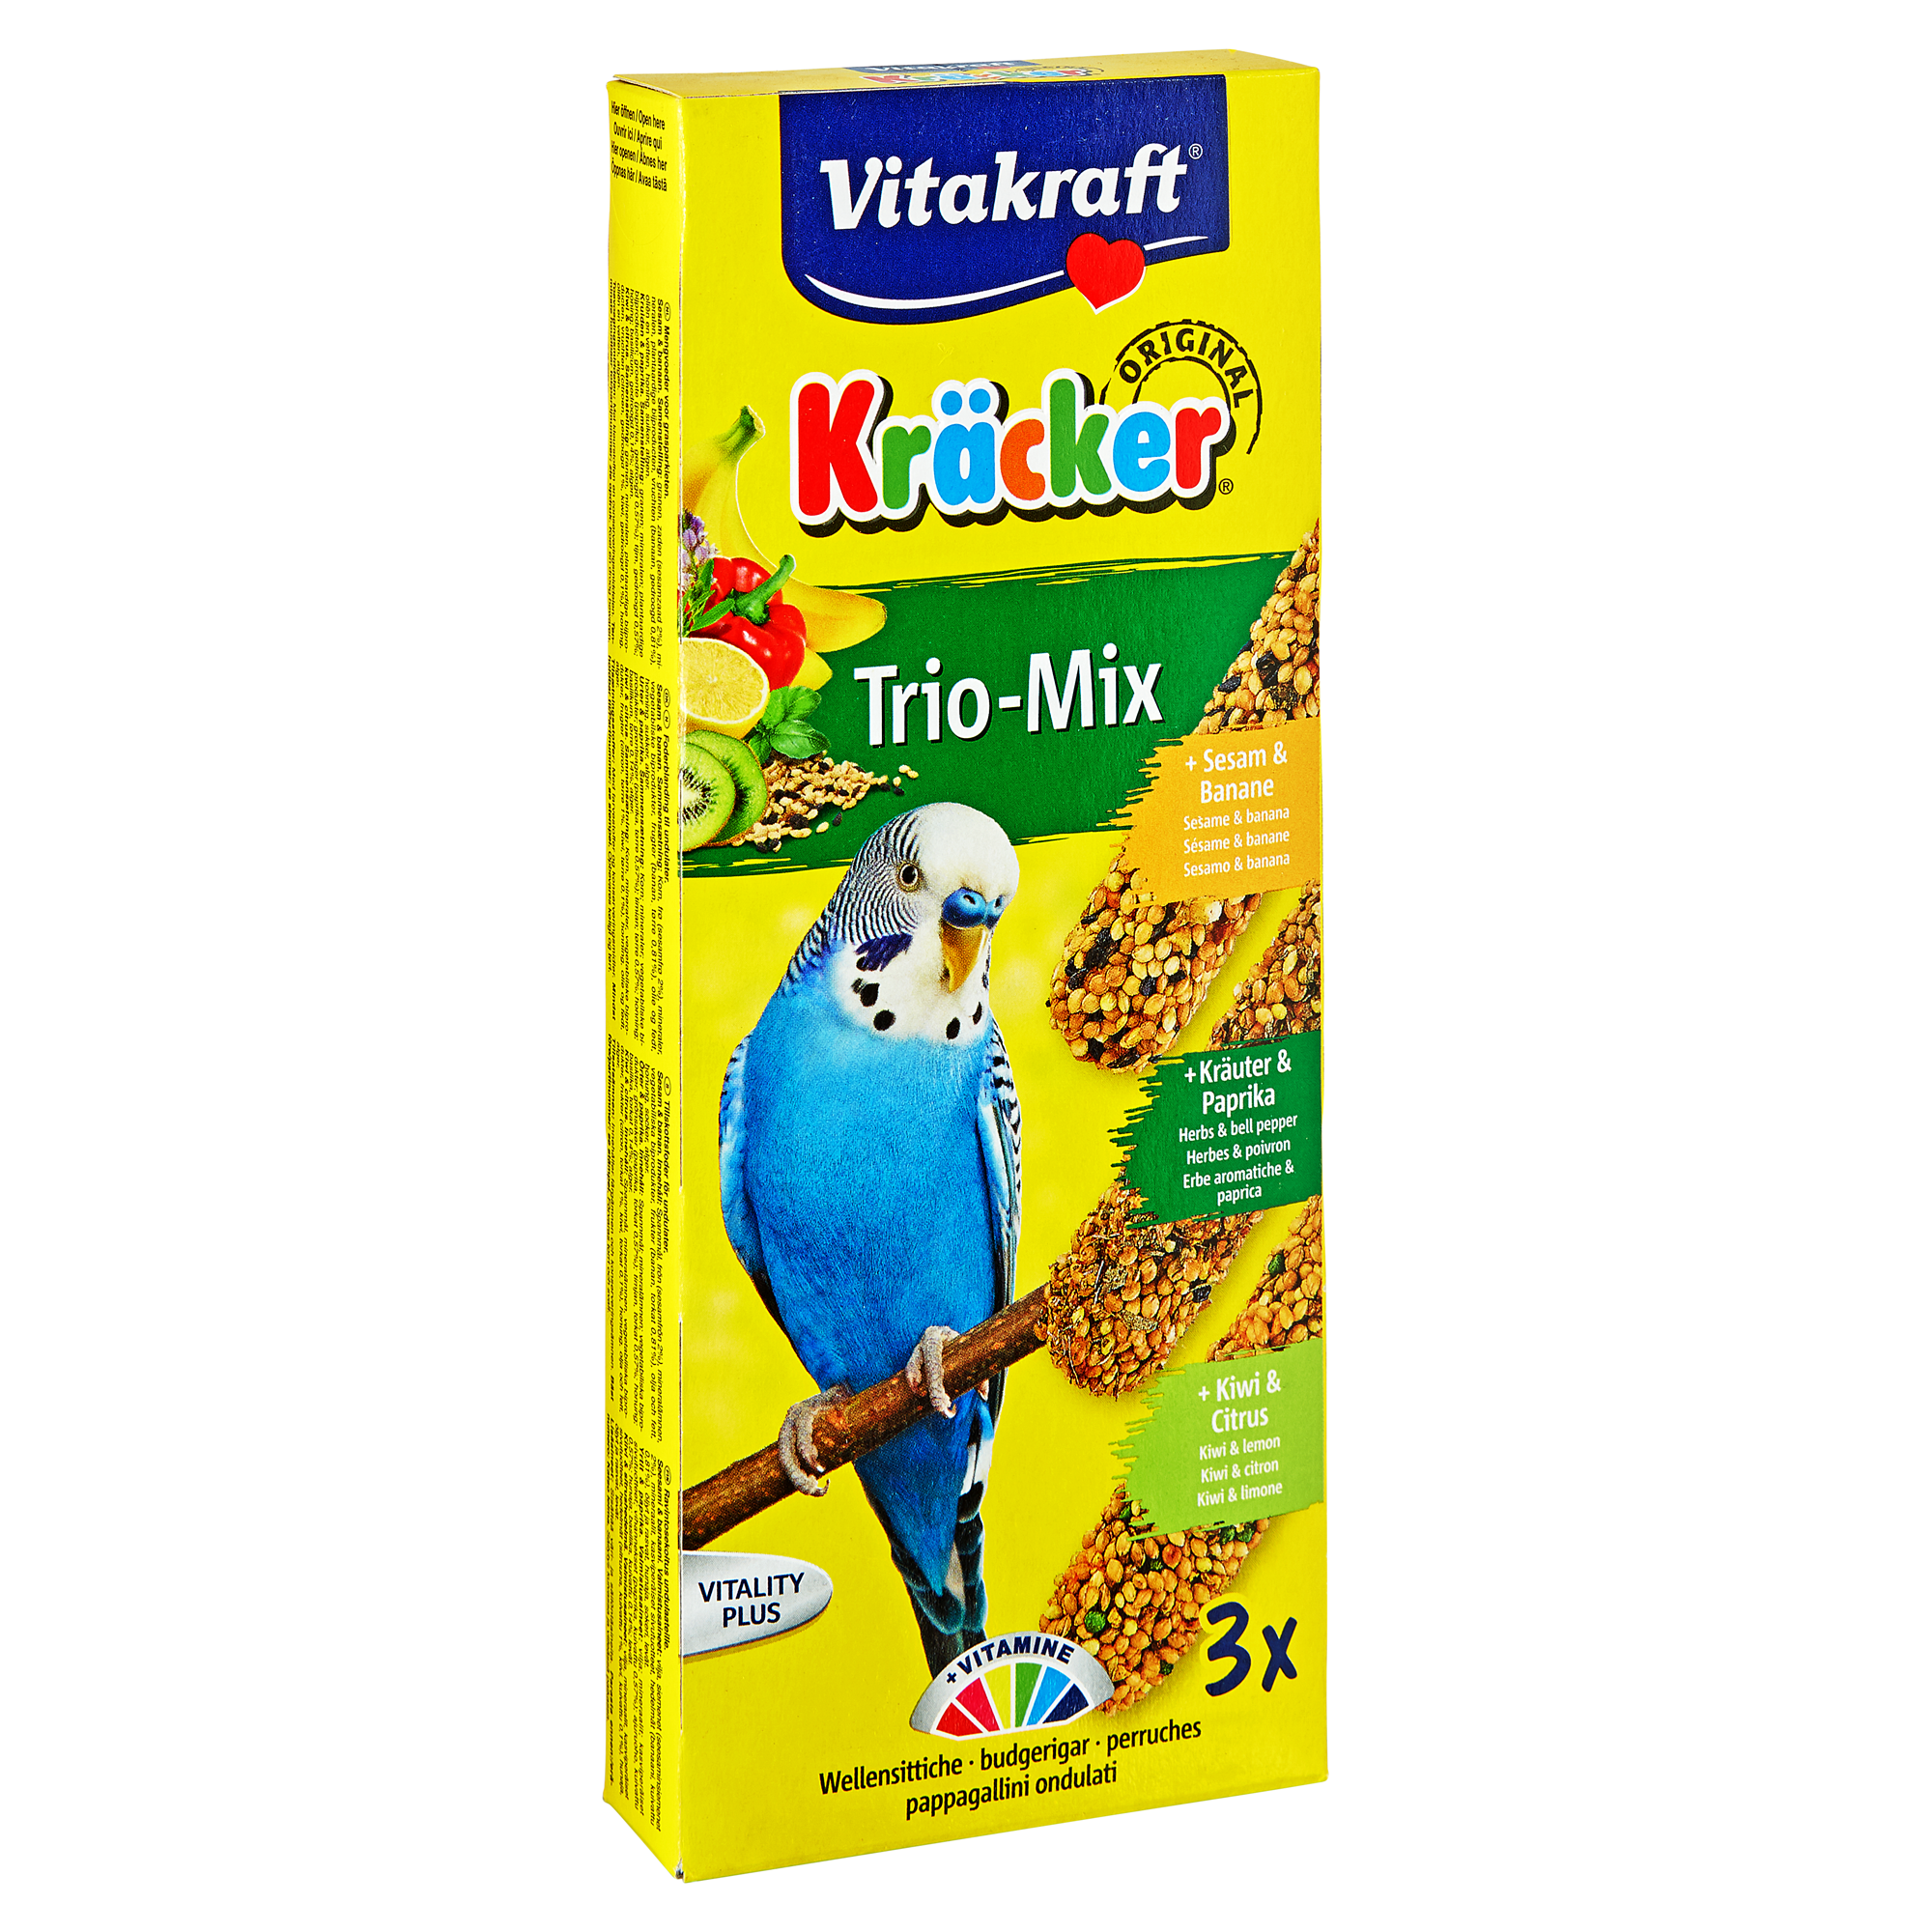 Sittichfutter "Kräcker® Original" Trio-Mix 90 g Sesam/Banane Kräuter/Paprika Kiwi/Citrus + product picture